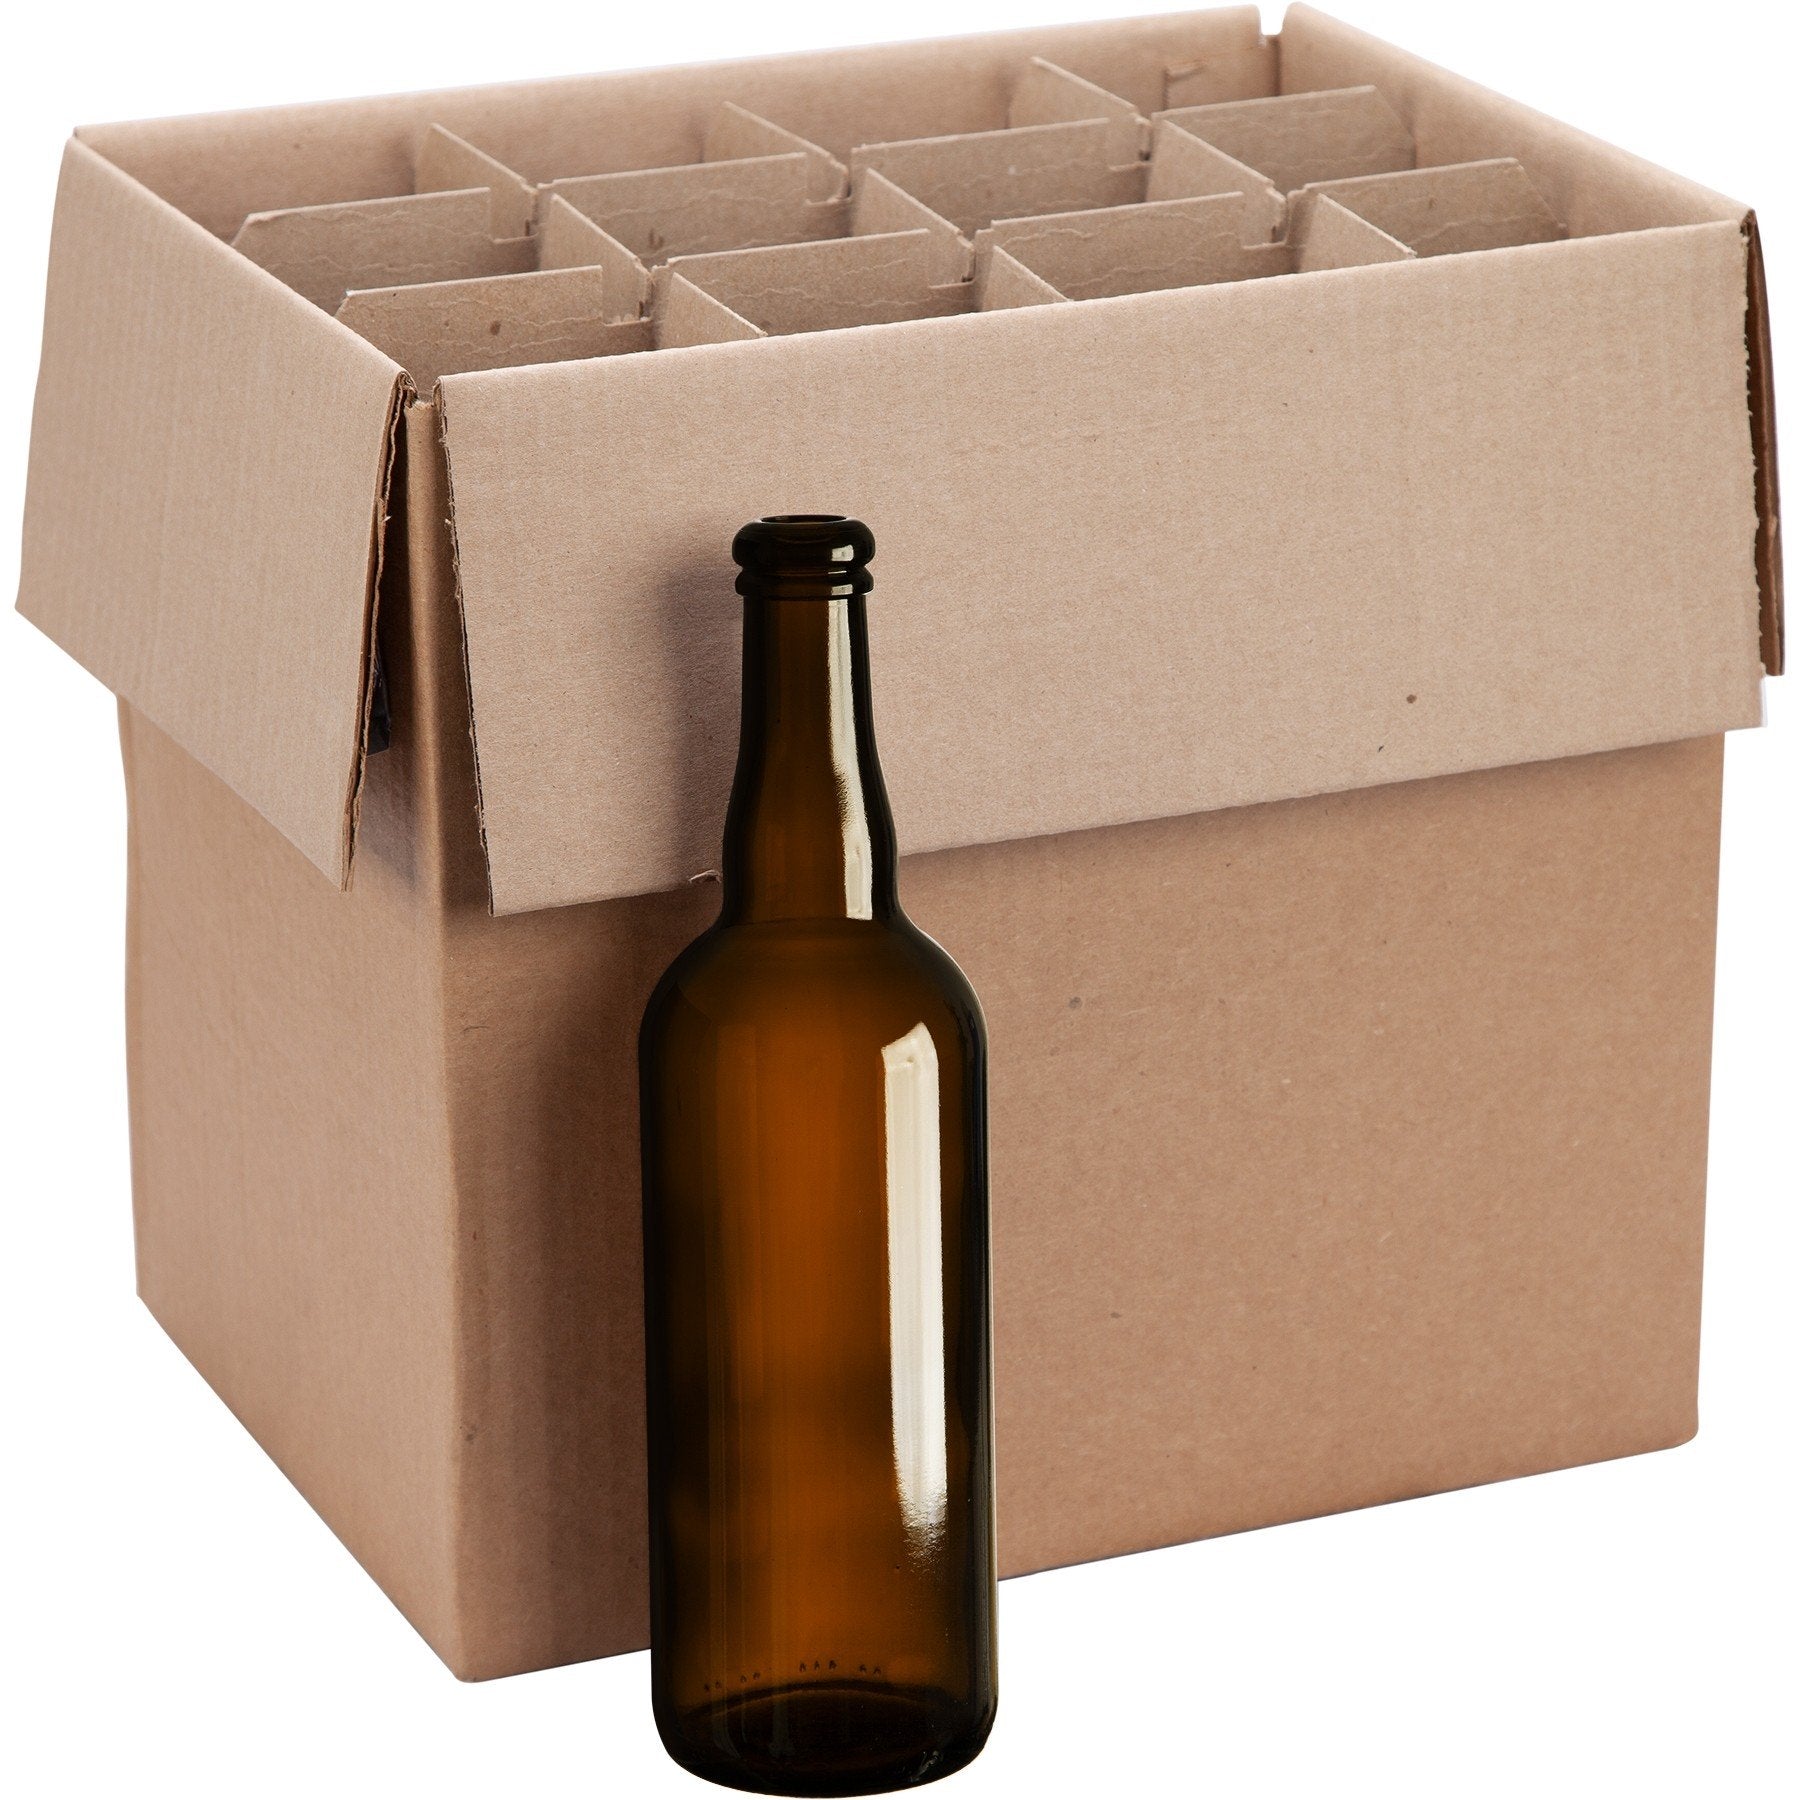 Belgian Beer Bottles - 750 ml, Amber - Case of 12